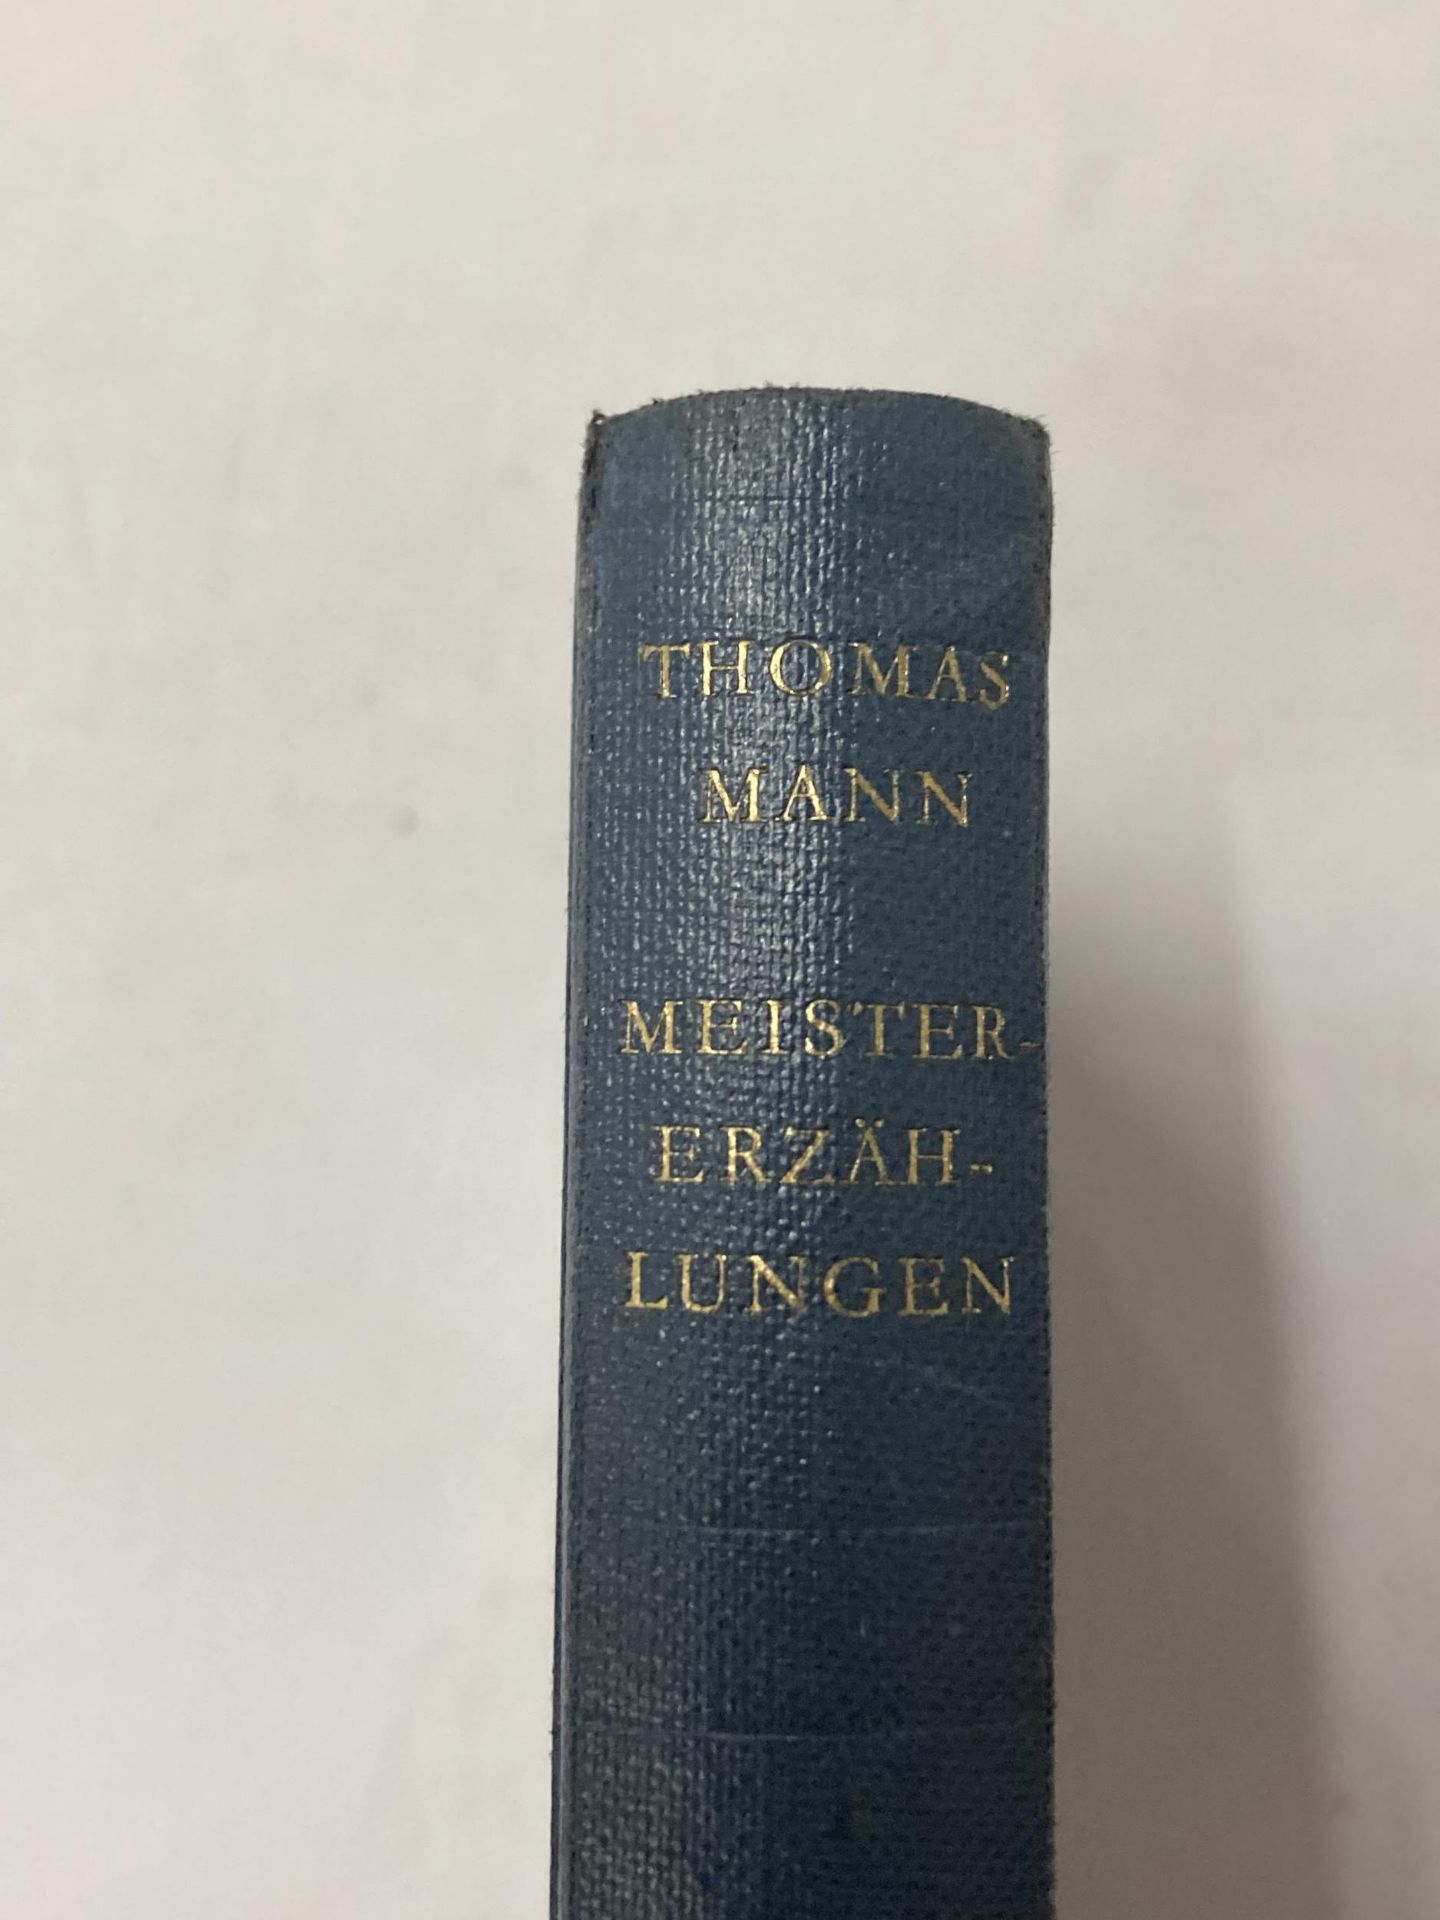 THOMAS MANN MEISTER-ERZAH LUNGEN, 1945 BOOK